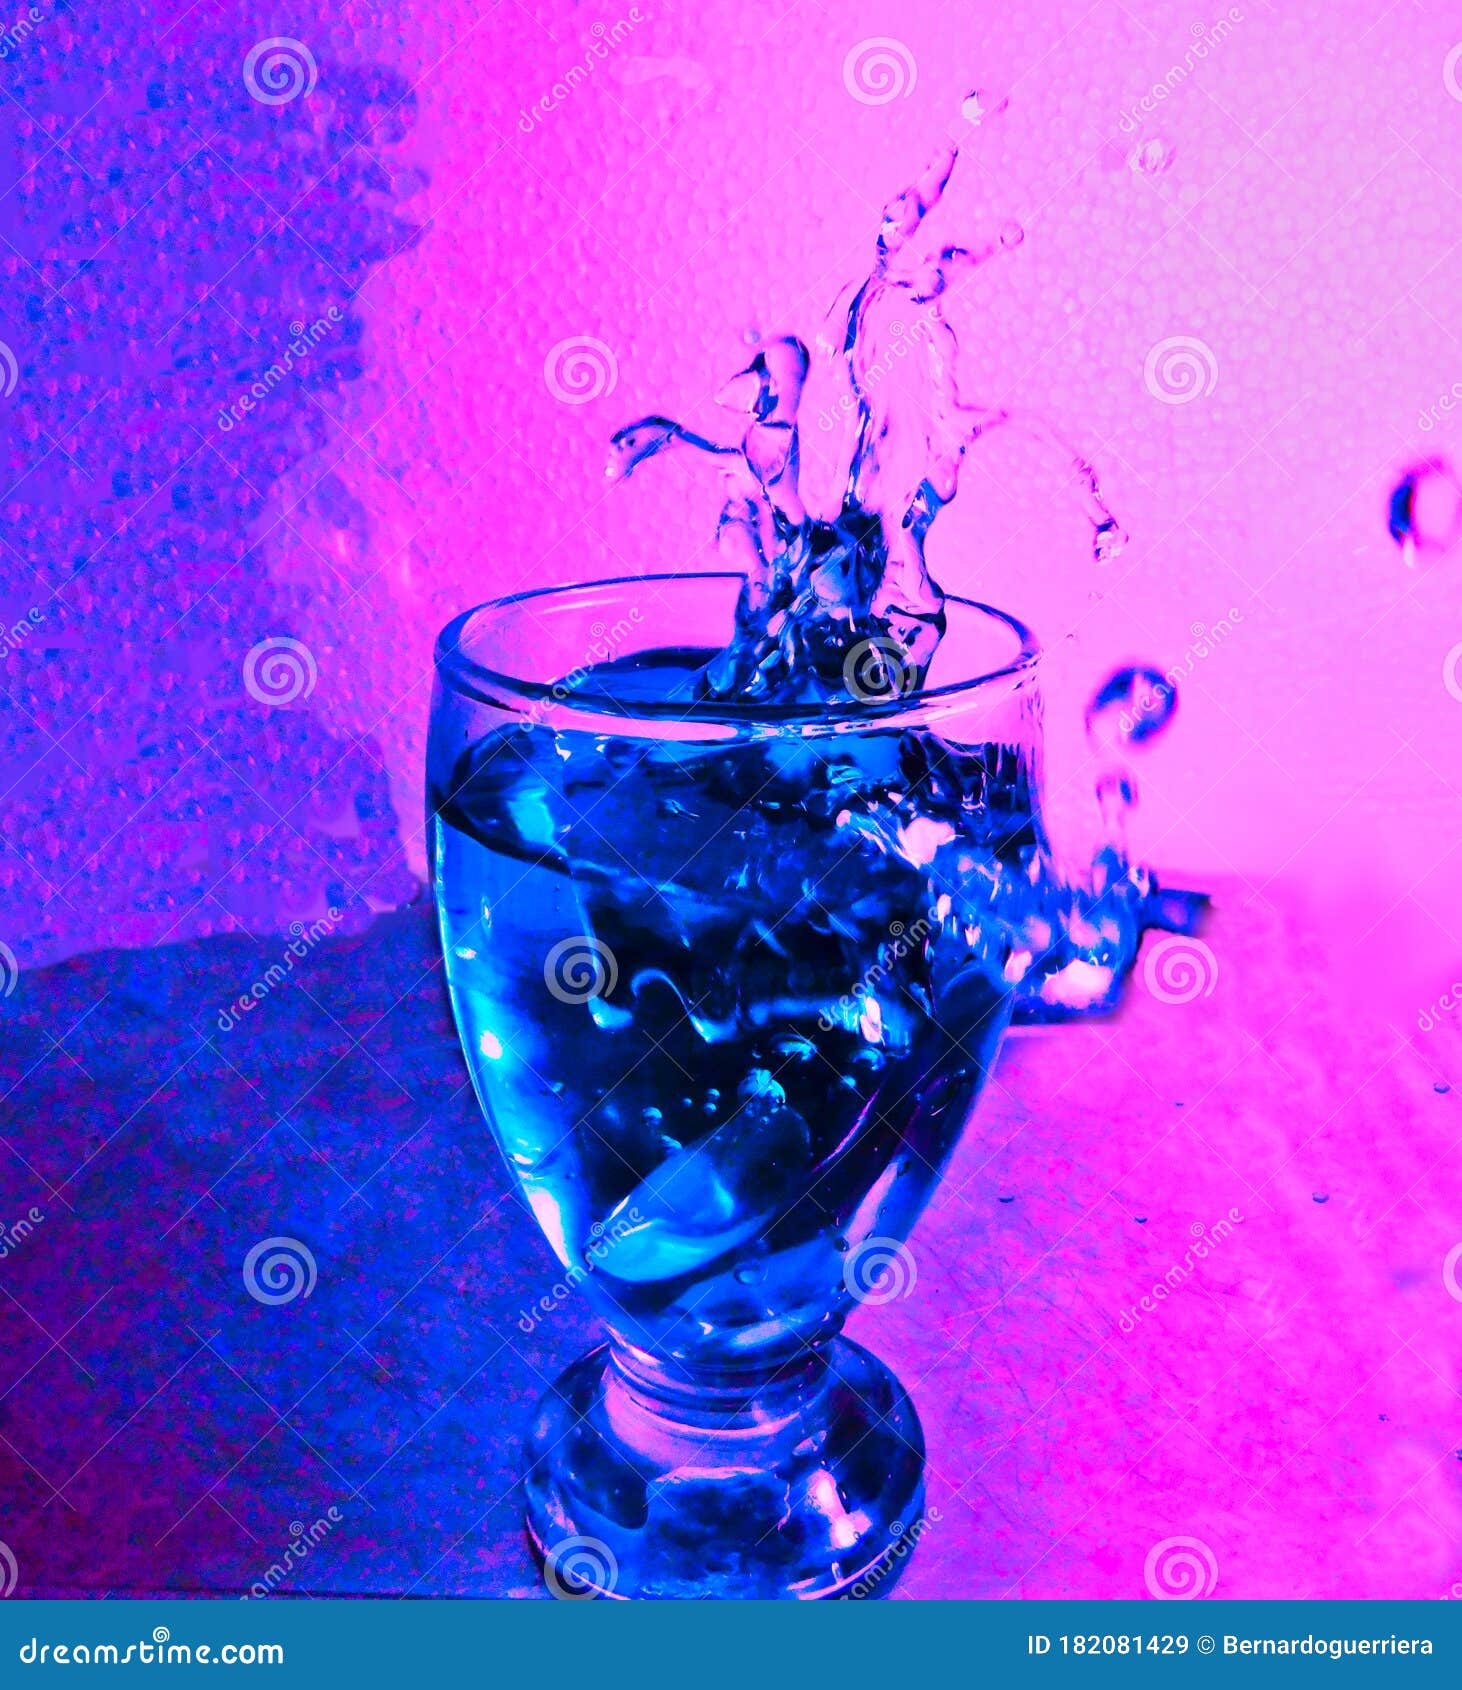 glass of water splashing drops of liquid.